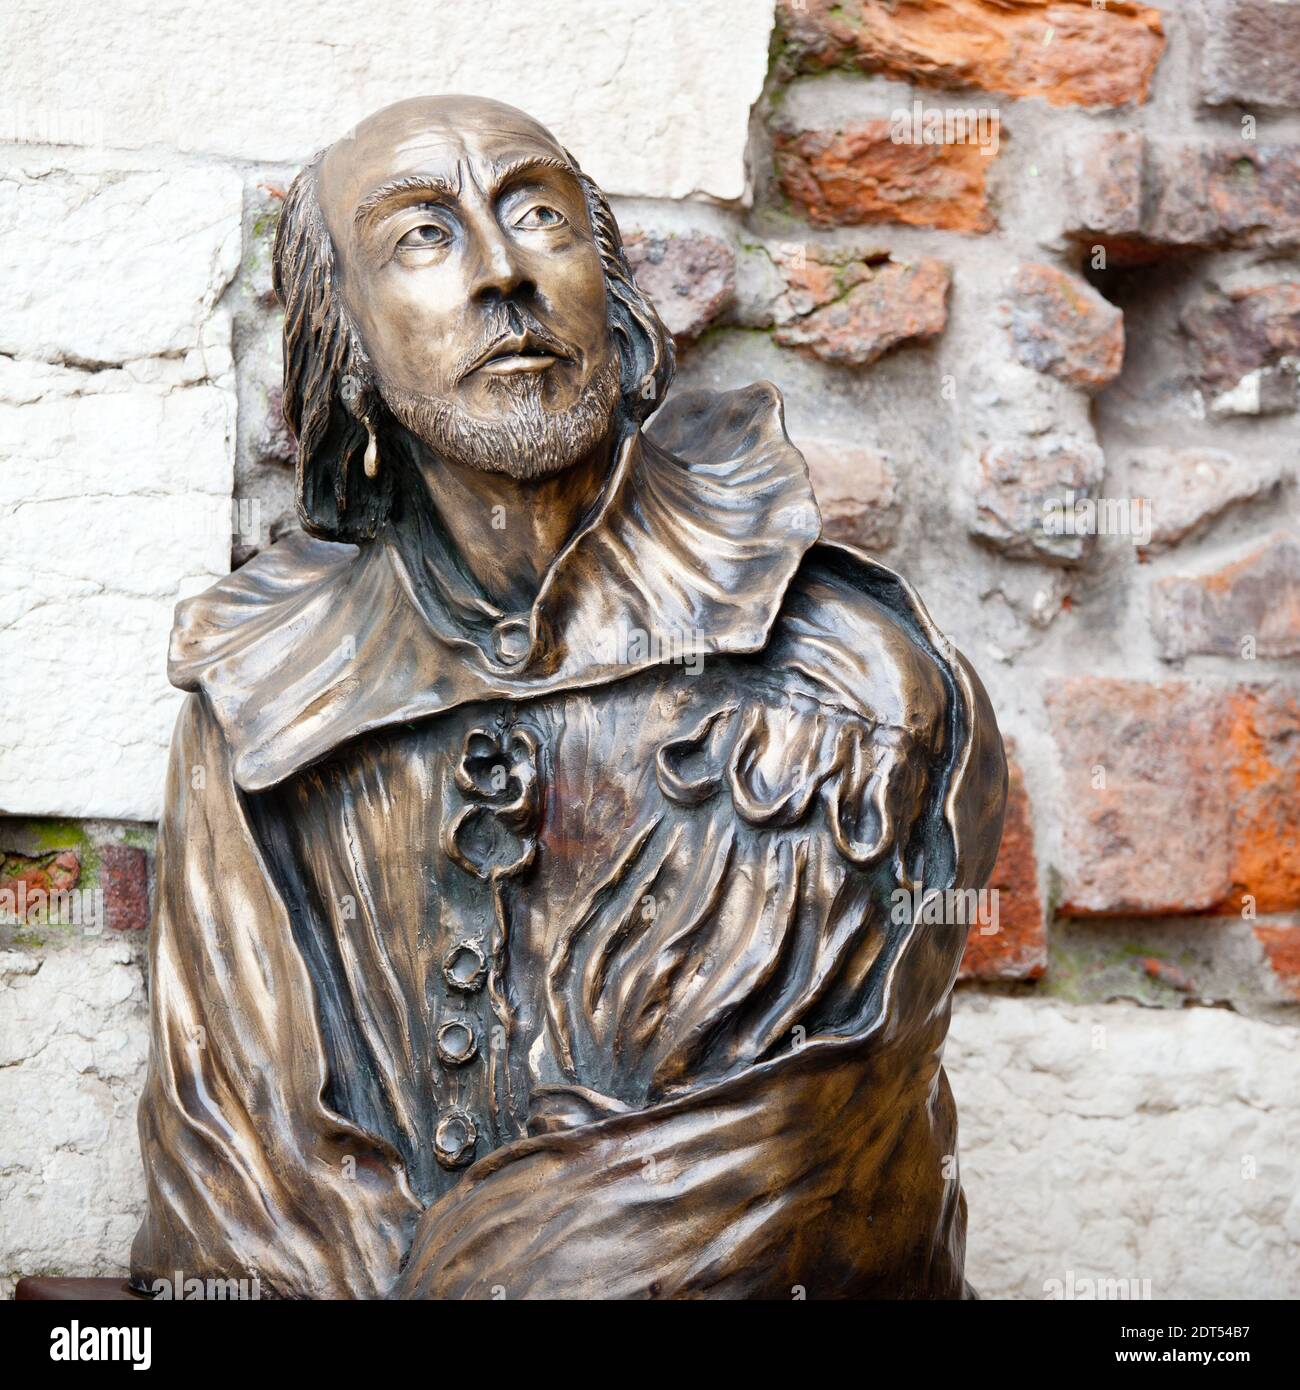 William Shakespeare statue in Verona, Italy Stock Photo